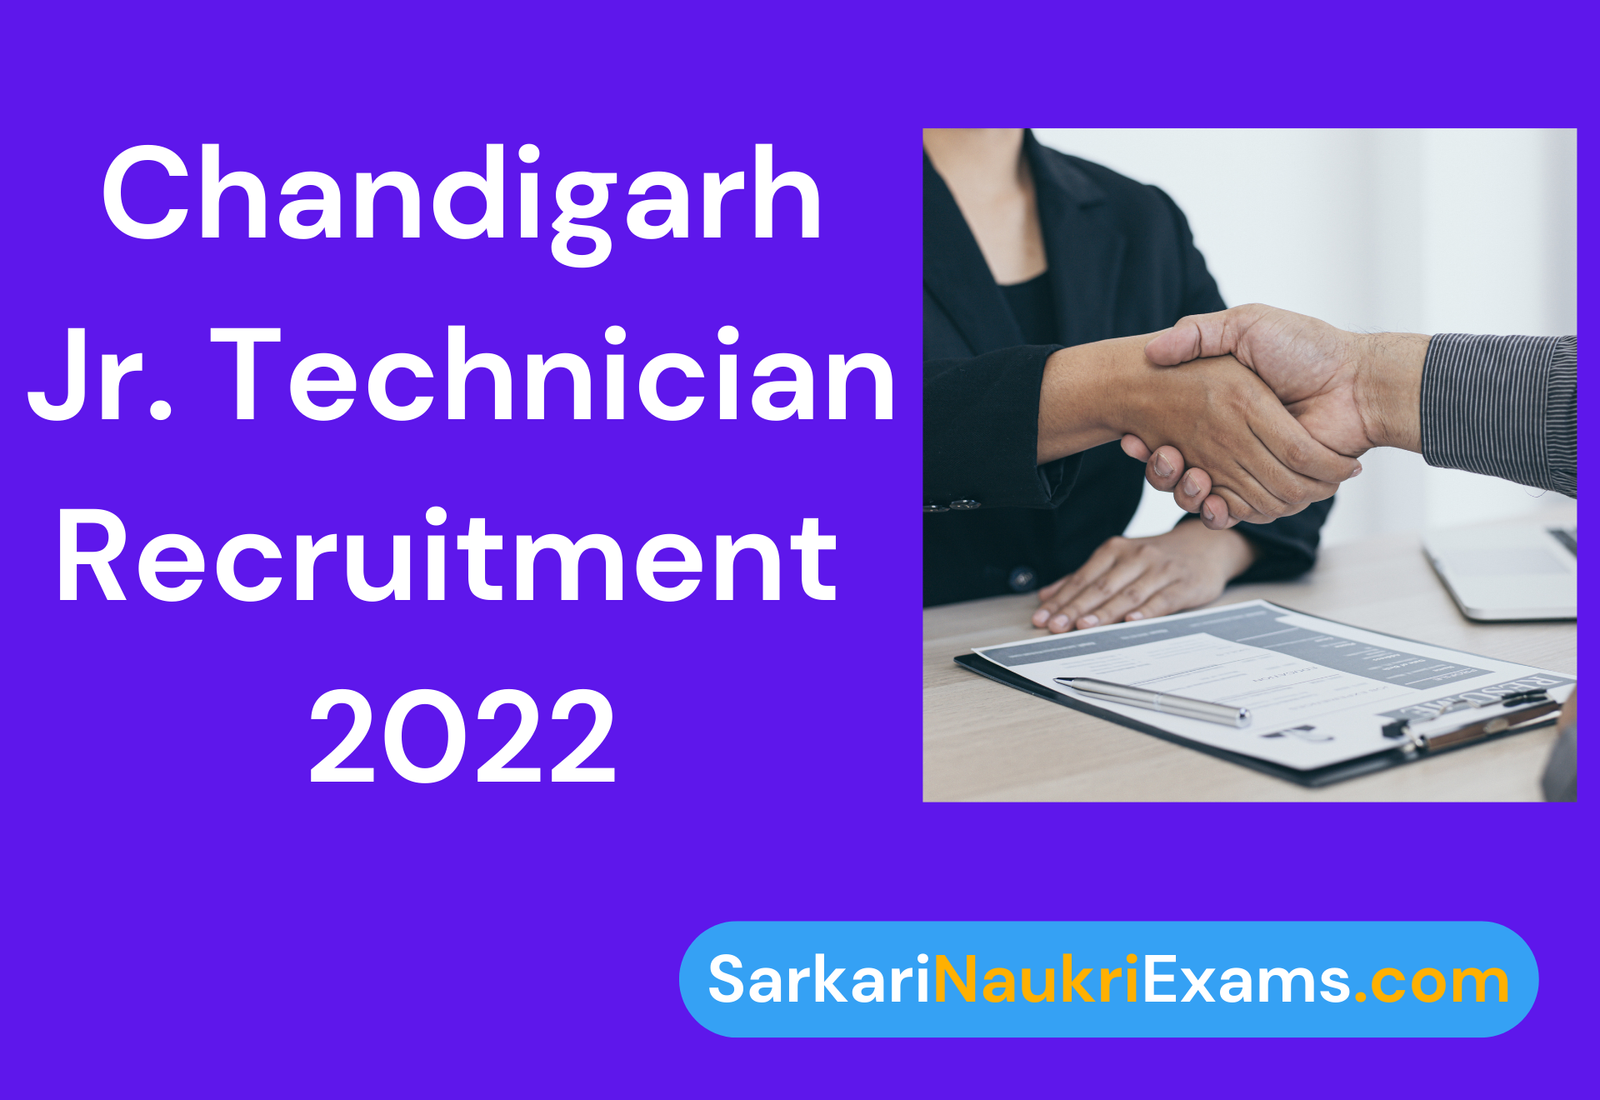 Chandigarh Junior Technician Recruitment Form 2022 | New Latest Apply Online 